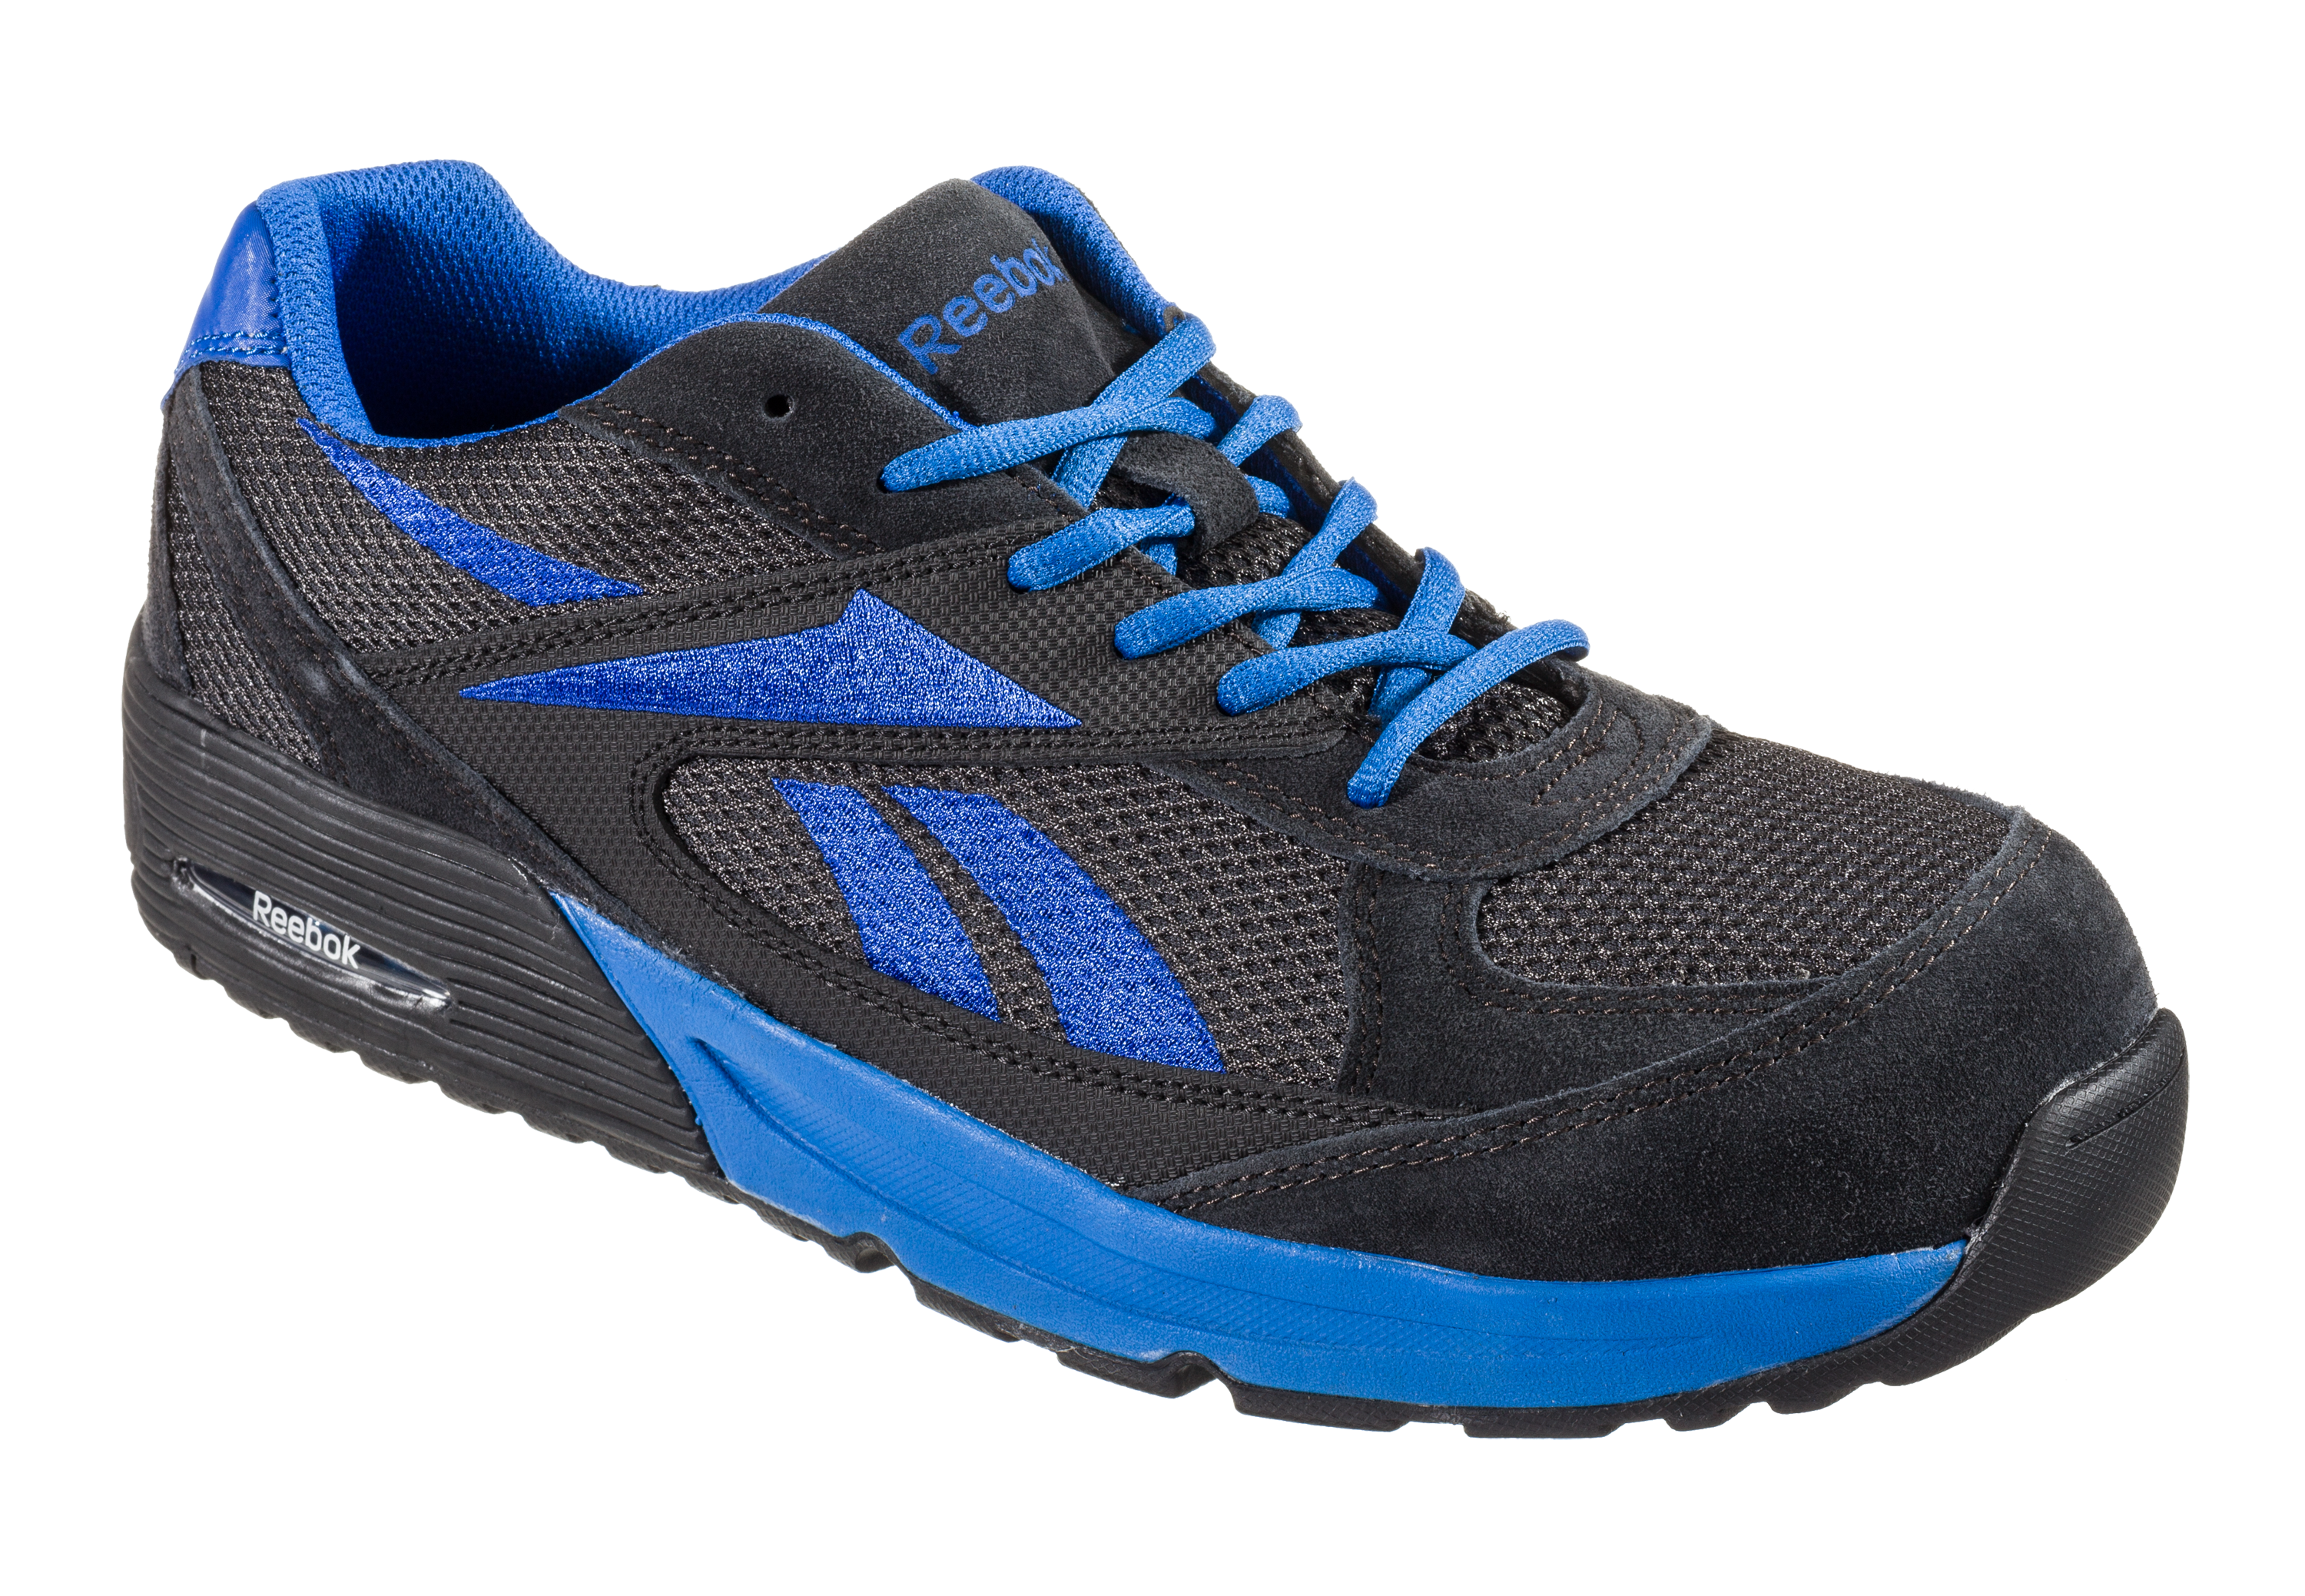 Reebok Beviad Safety Toe Work Shoes for Men | Bass Pro Shops